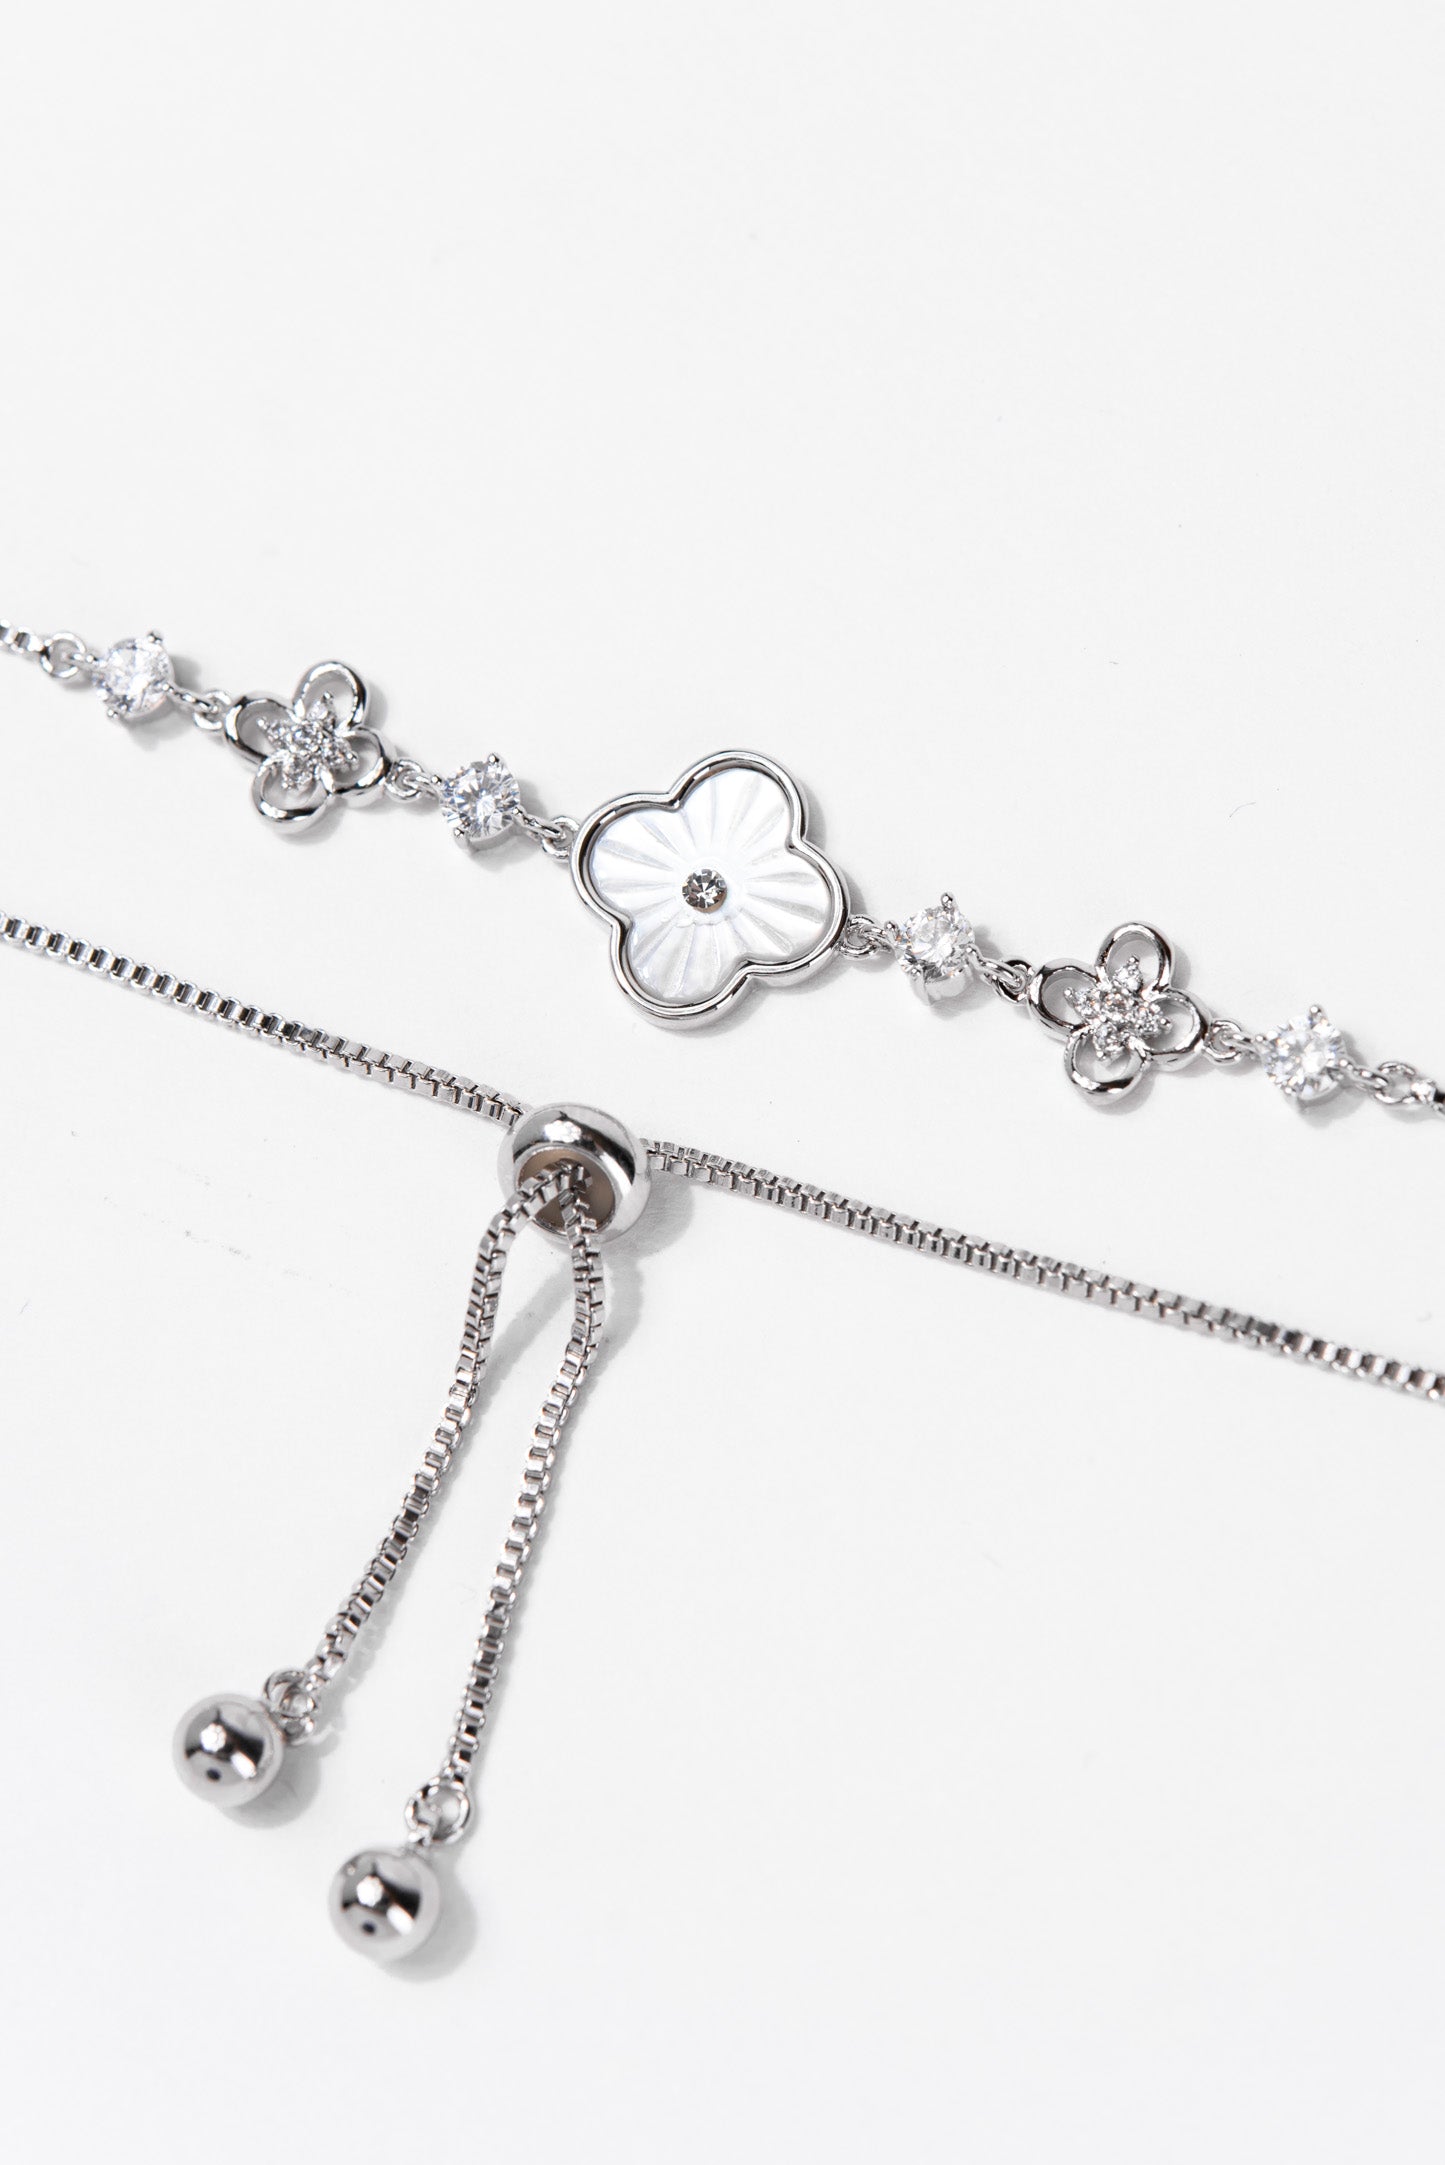 Essie Pearl Floral Adjustable Bracelet - Silver